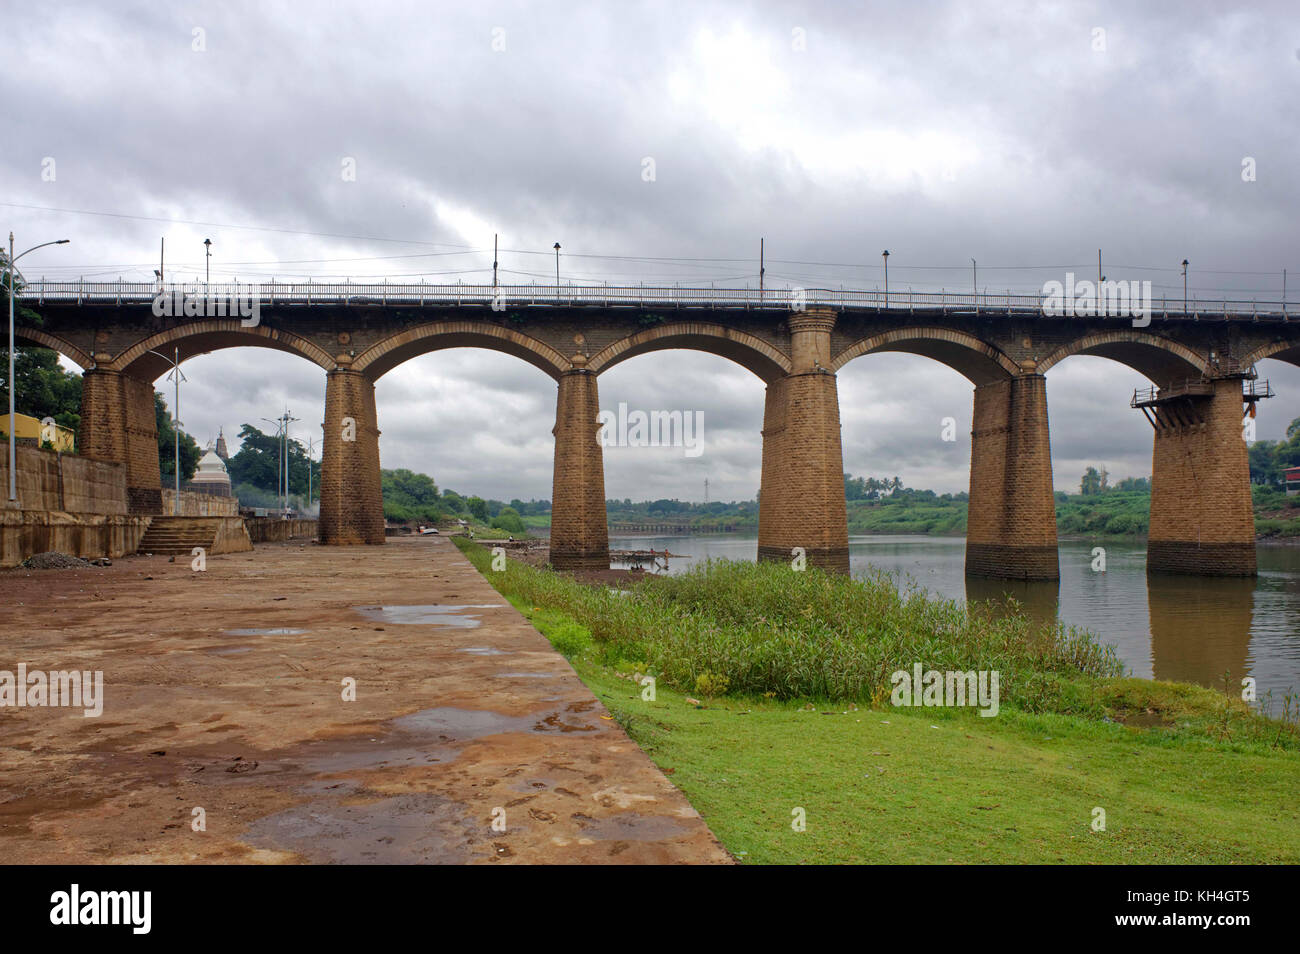 Irwin bridge on Krishna river, sangli, Maharashtra, India, Asia - stp 259644 Stock Photo